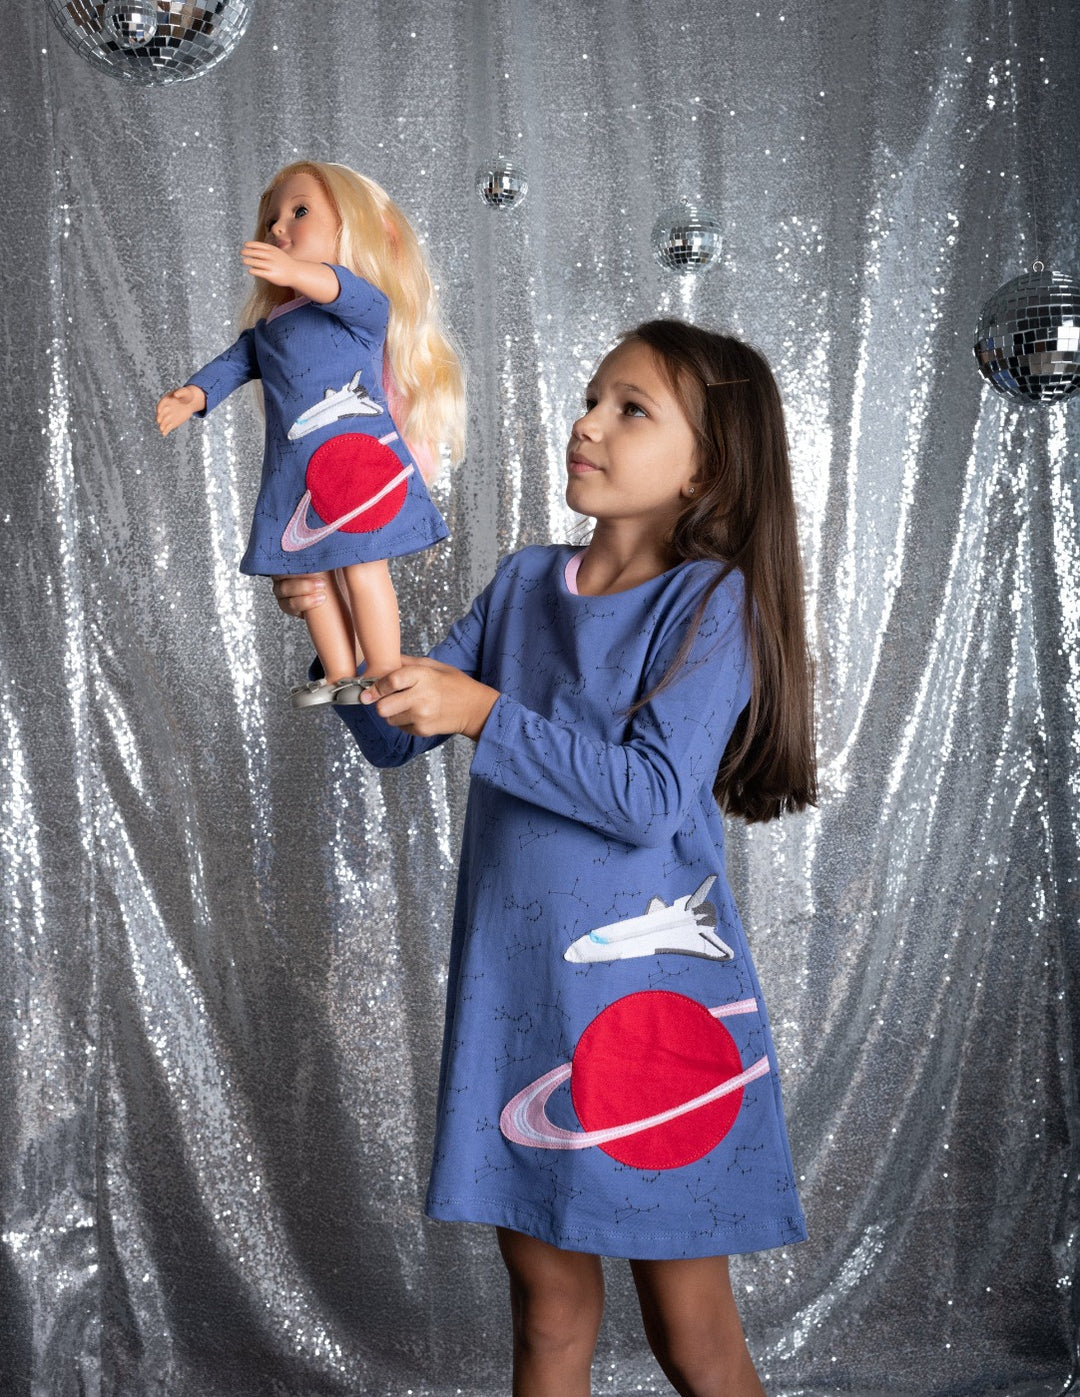  Leveret: Kid & Doll Matching Pajamas